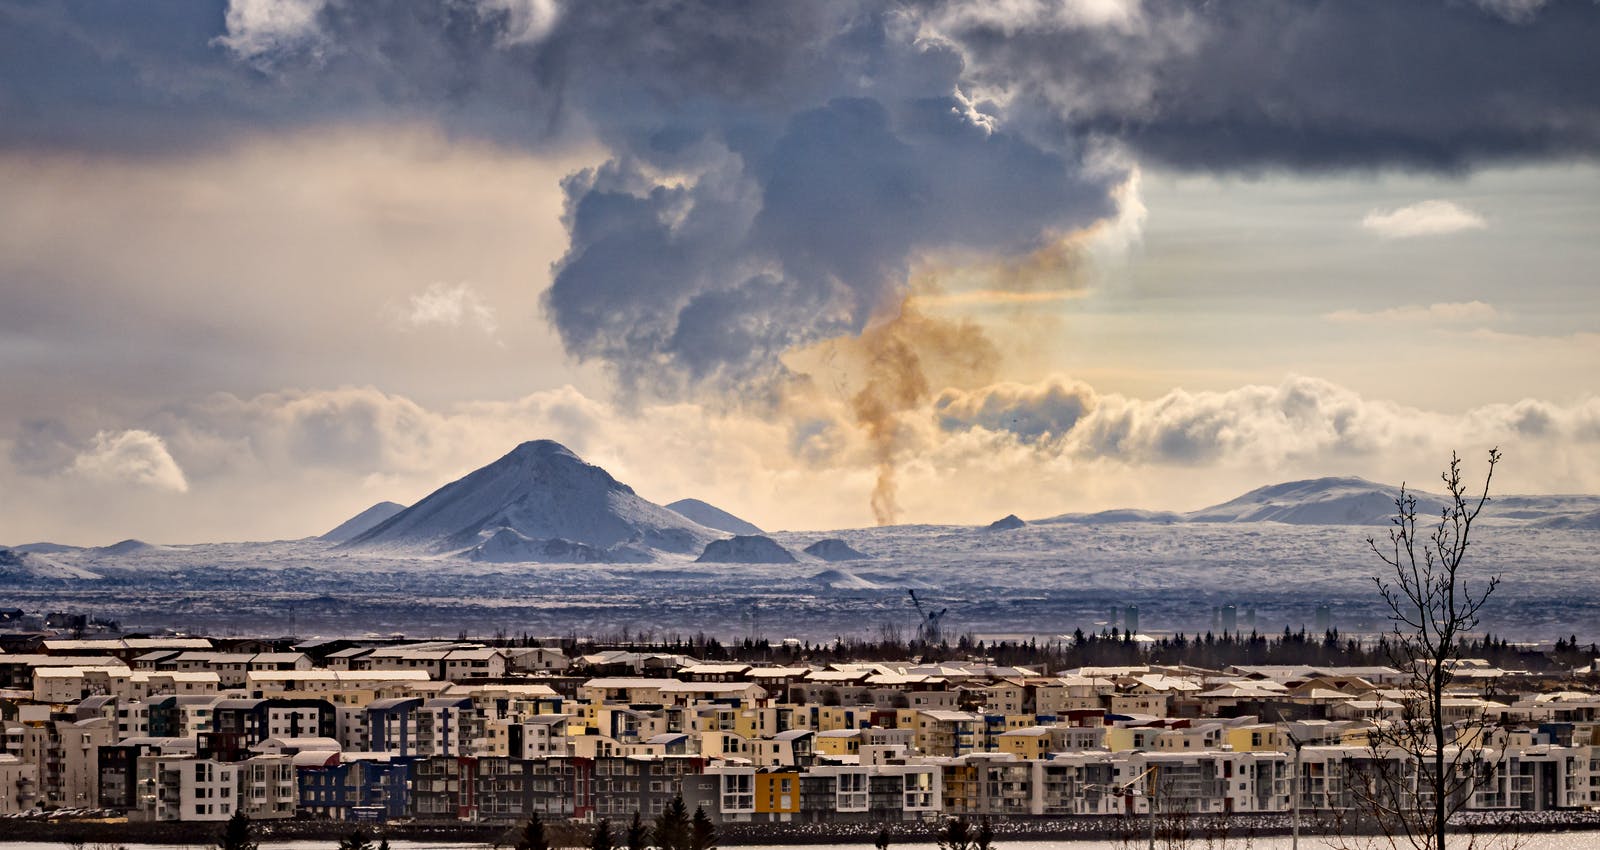 Reykjavik and Mount Keilir in the background